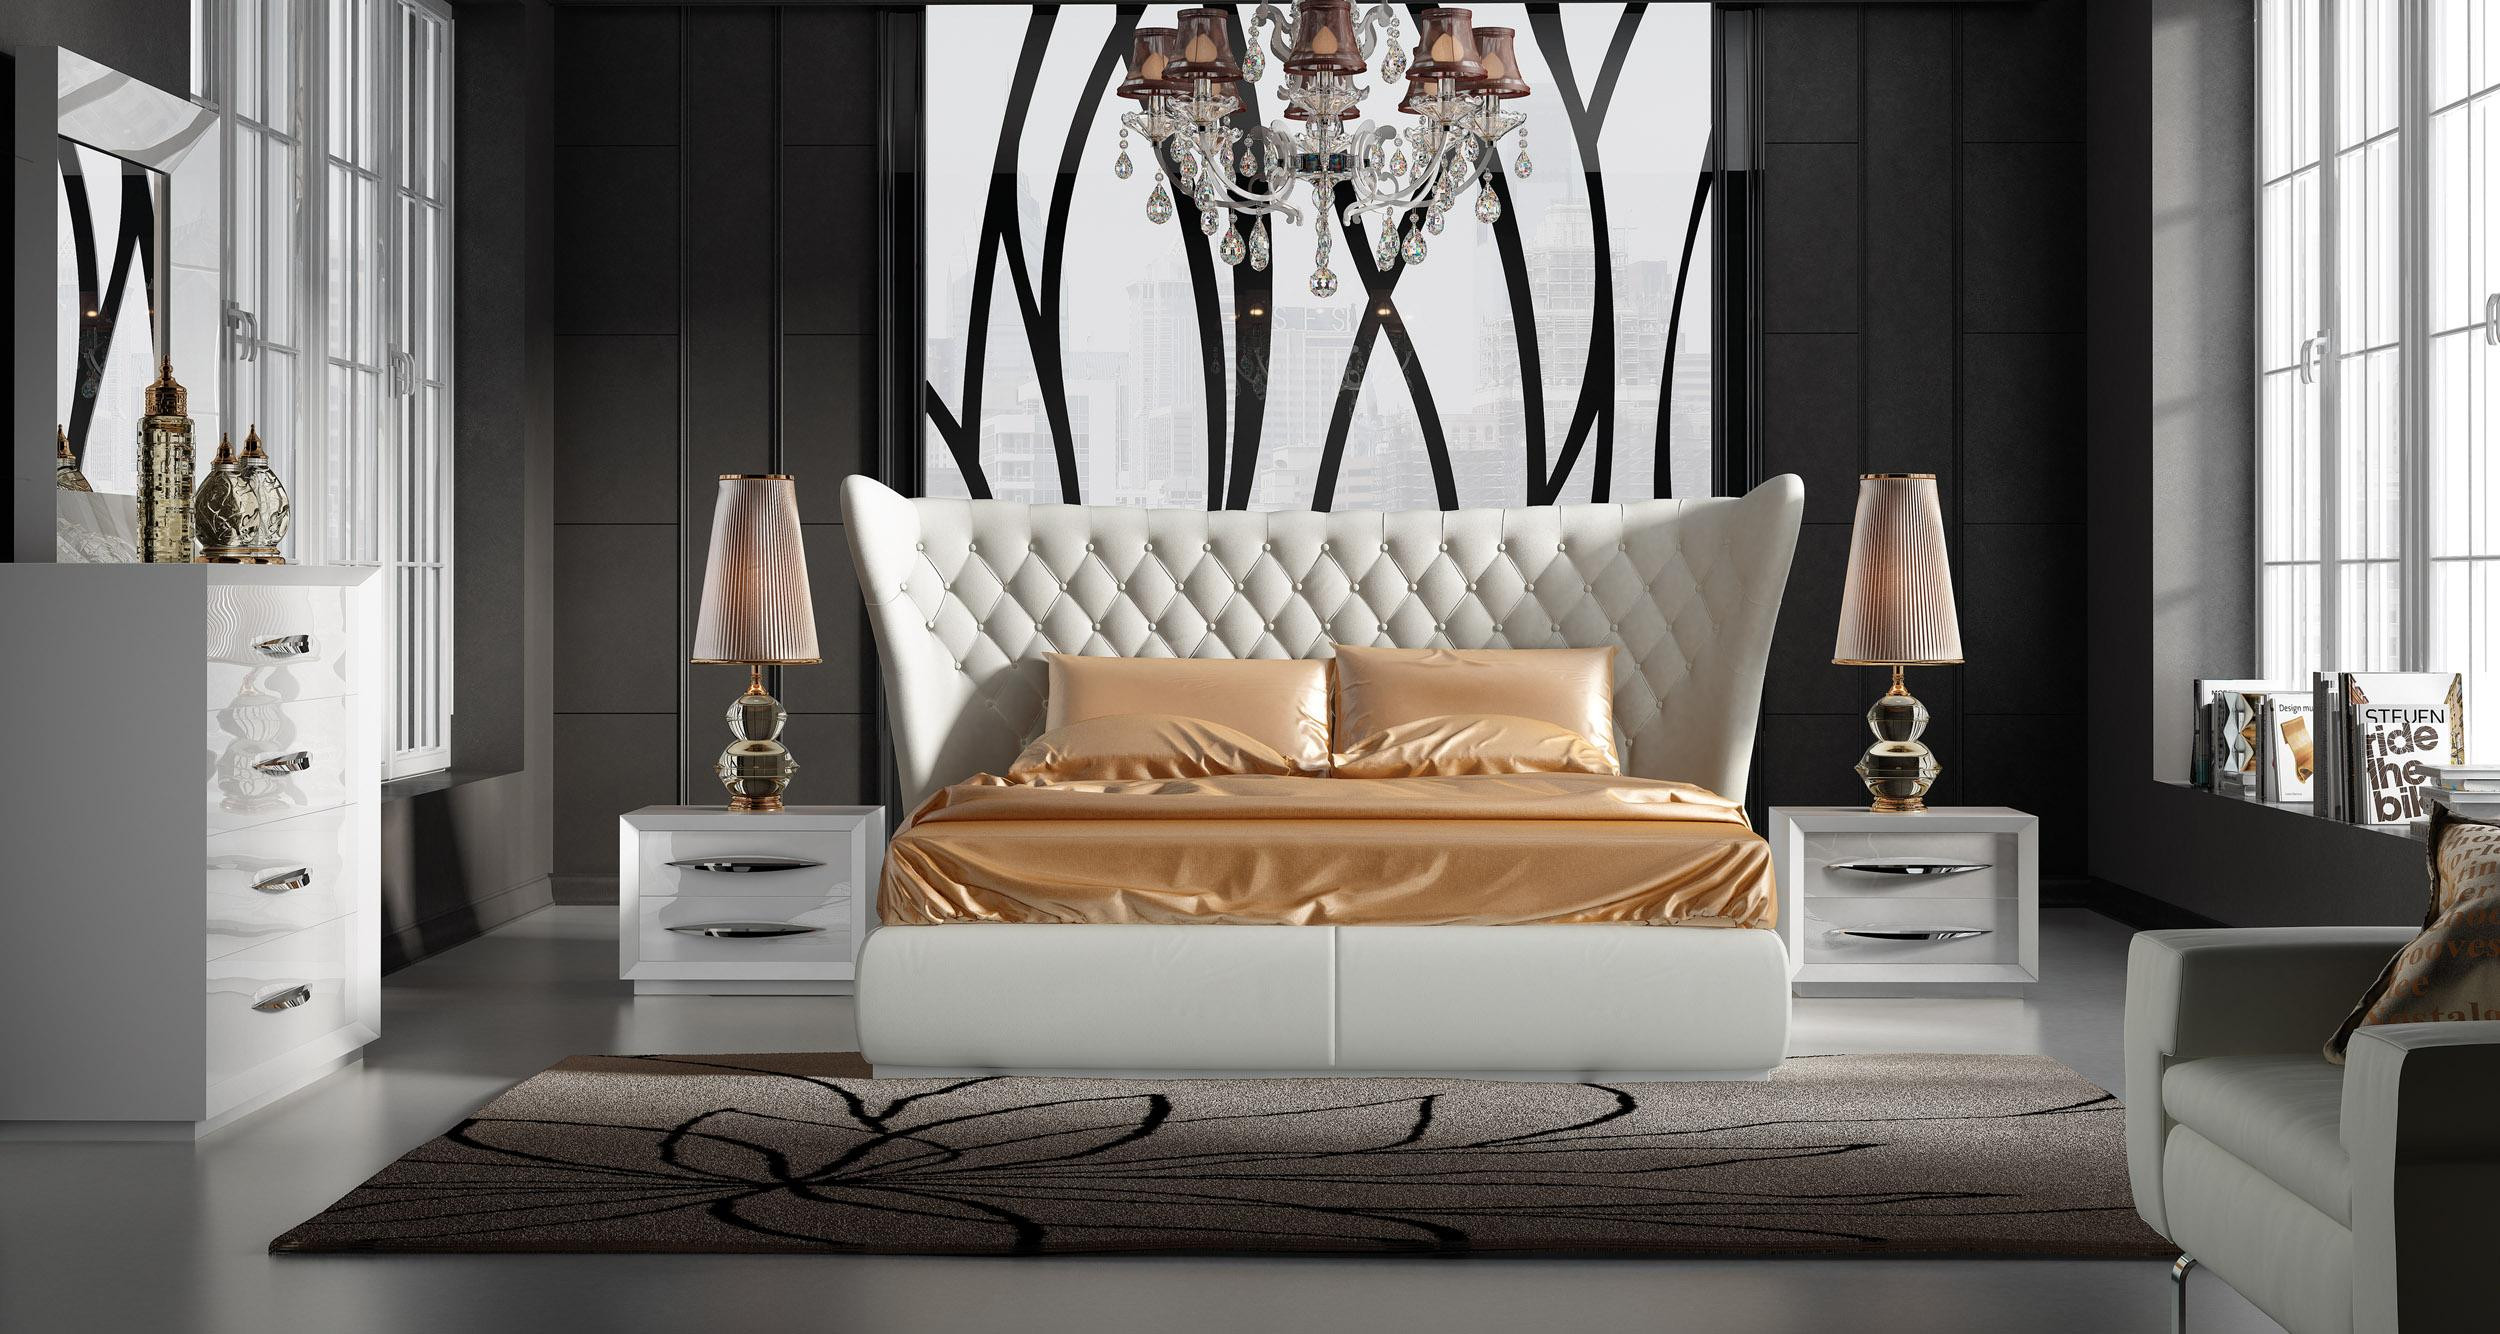 Modern Luxury Bedroom Furniture
 Stylish Leather Luxury Bedroom Furniture Sets Charlotte